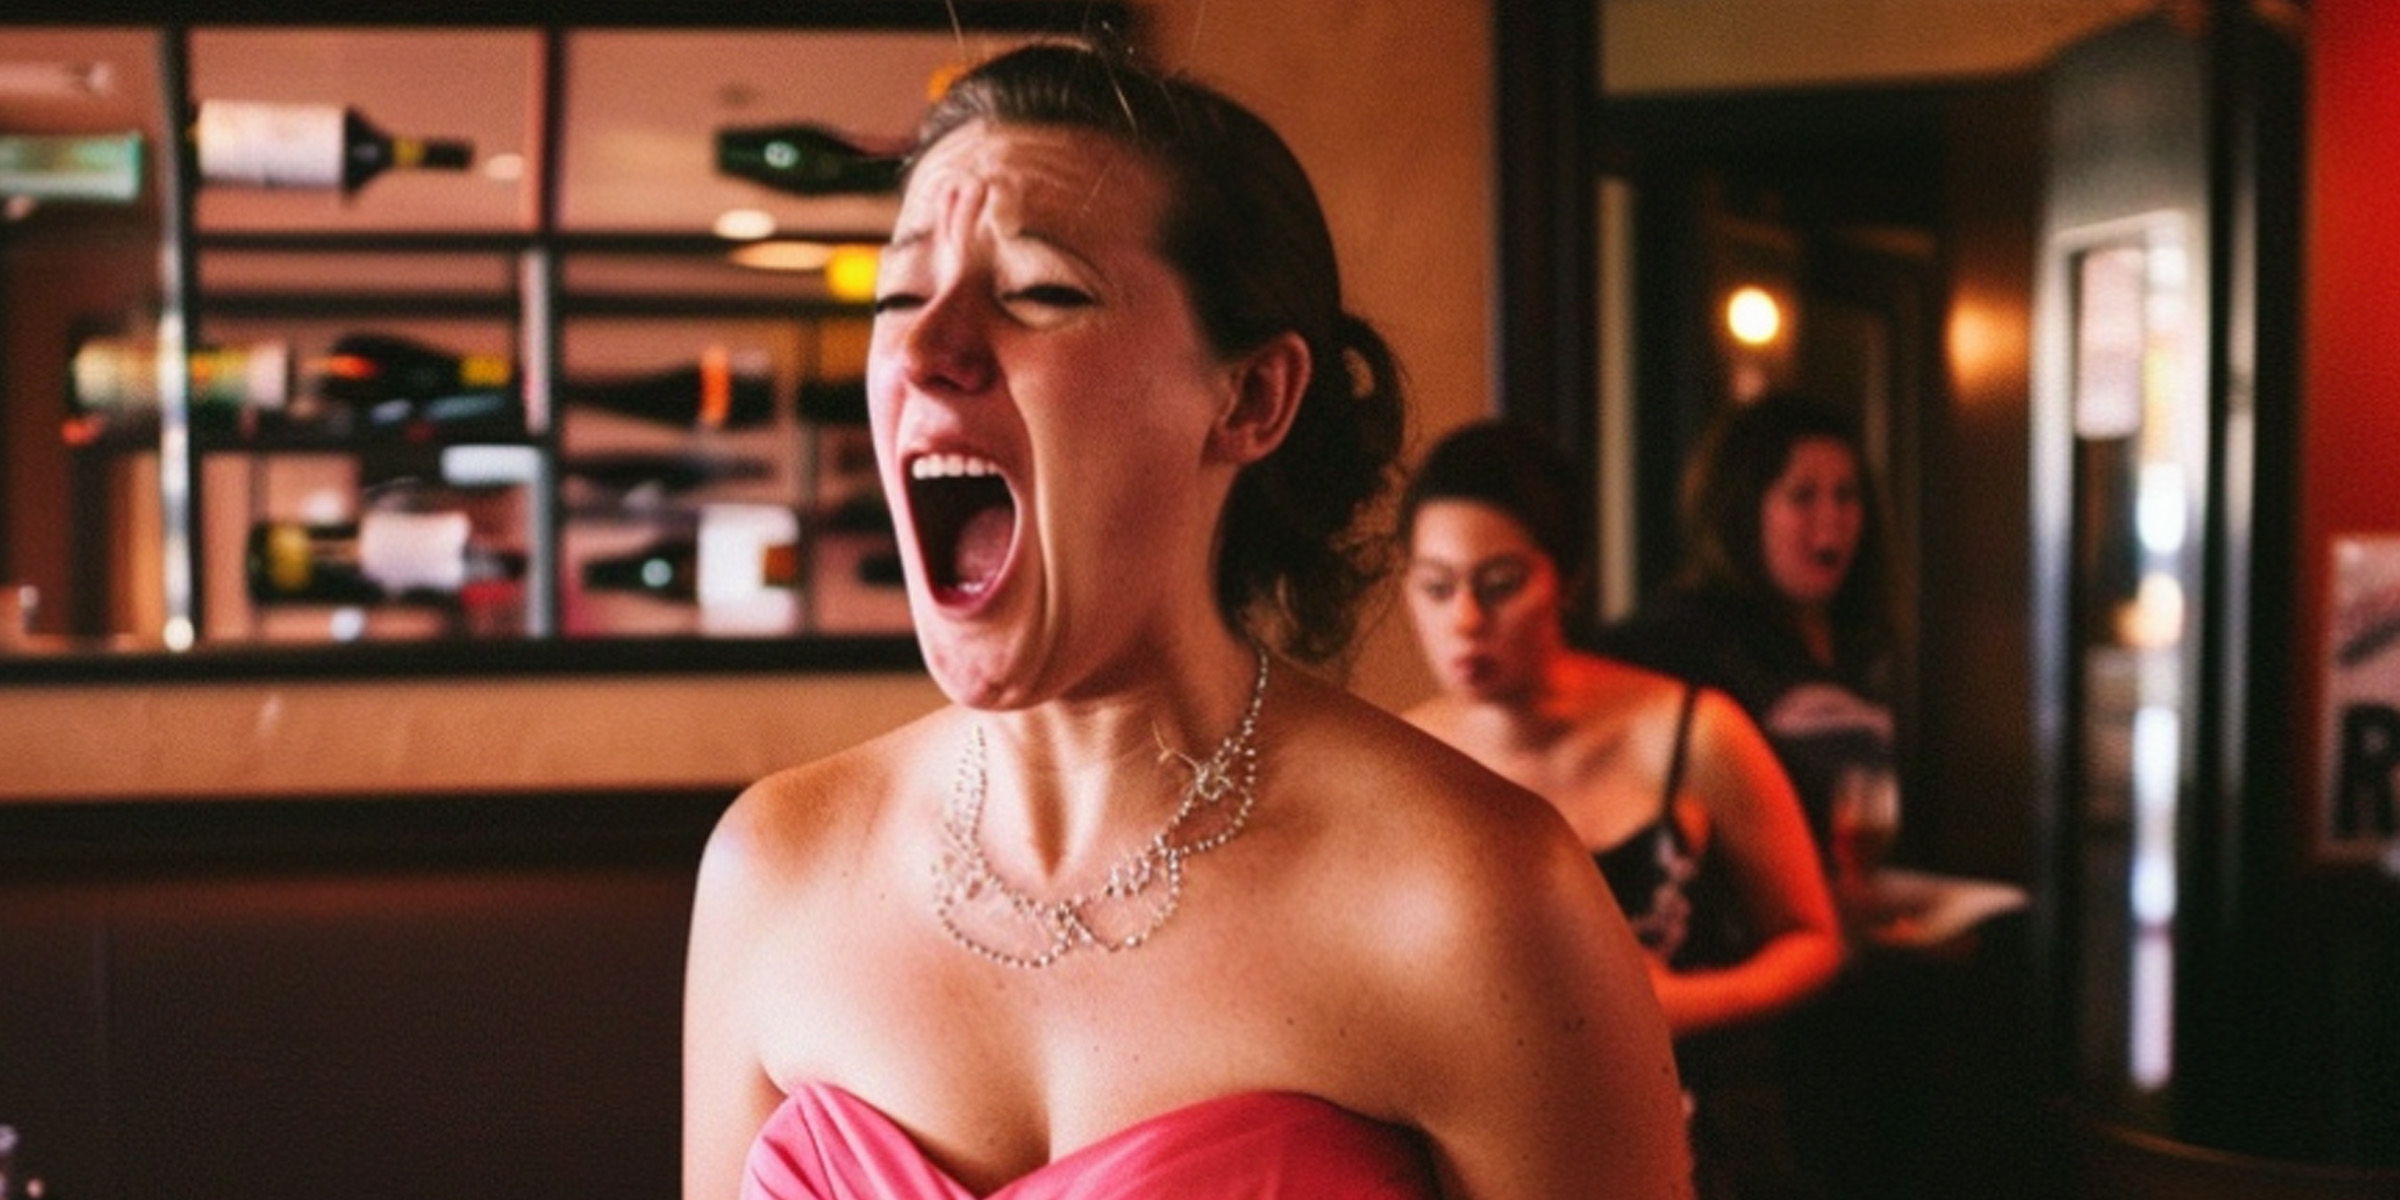 A bridesmaid yelling | Source: AmoMama